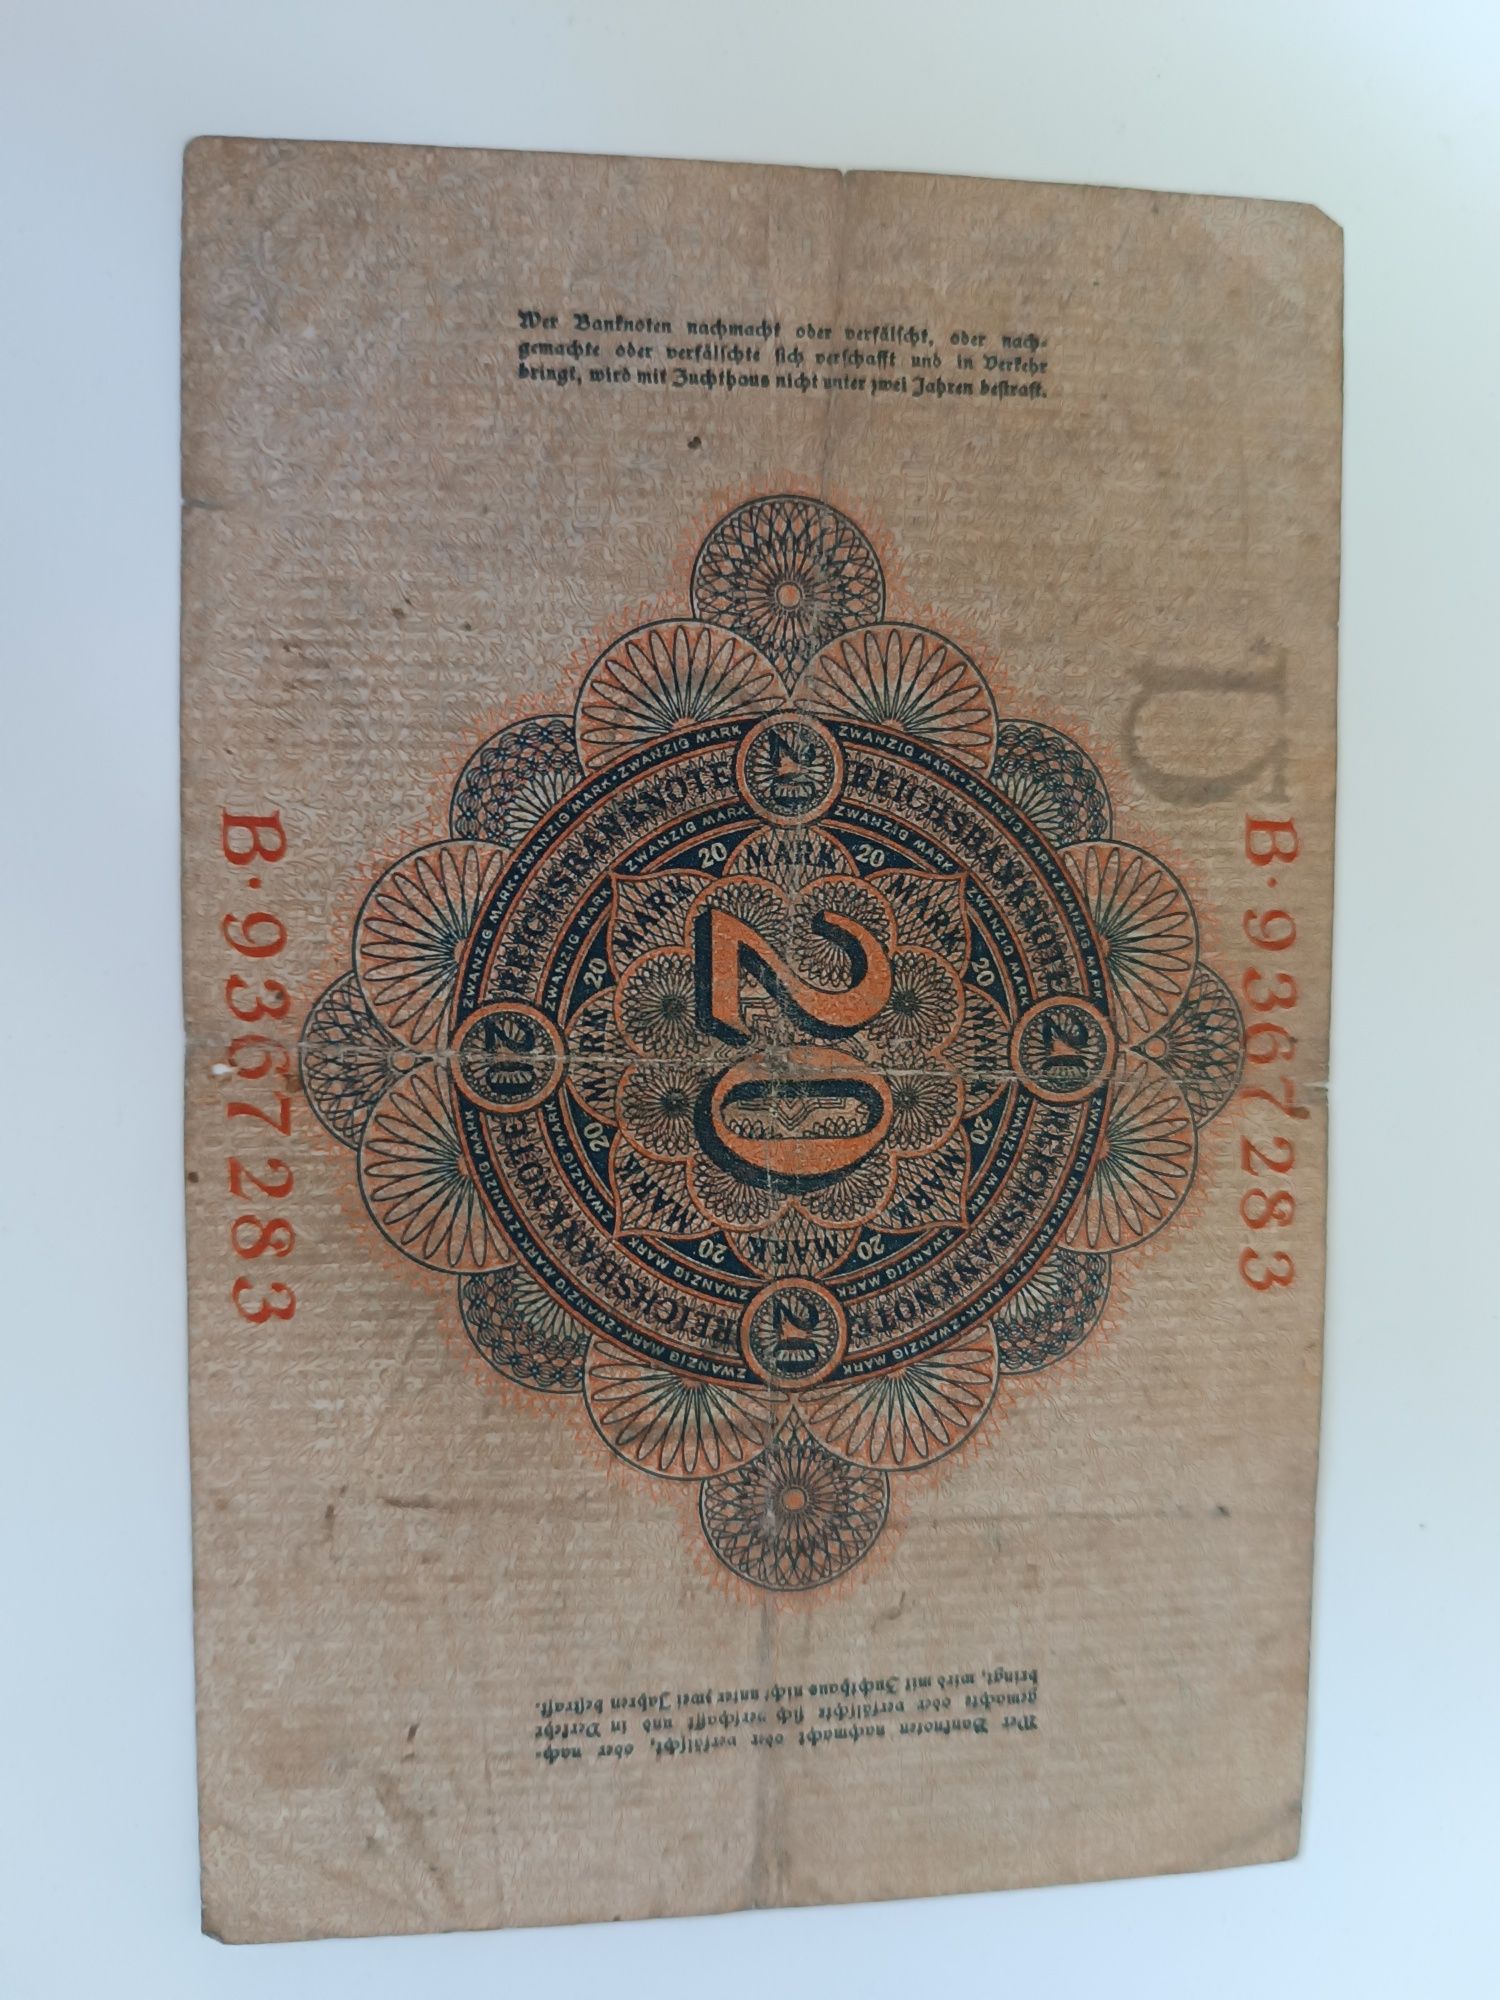 Banknot 20 marek niemieckich z 1910 roku